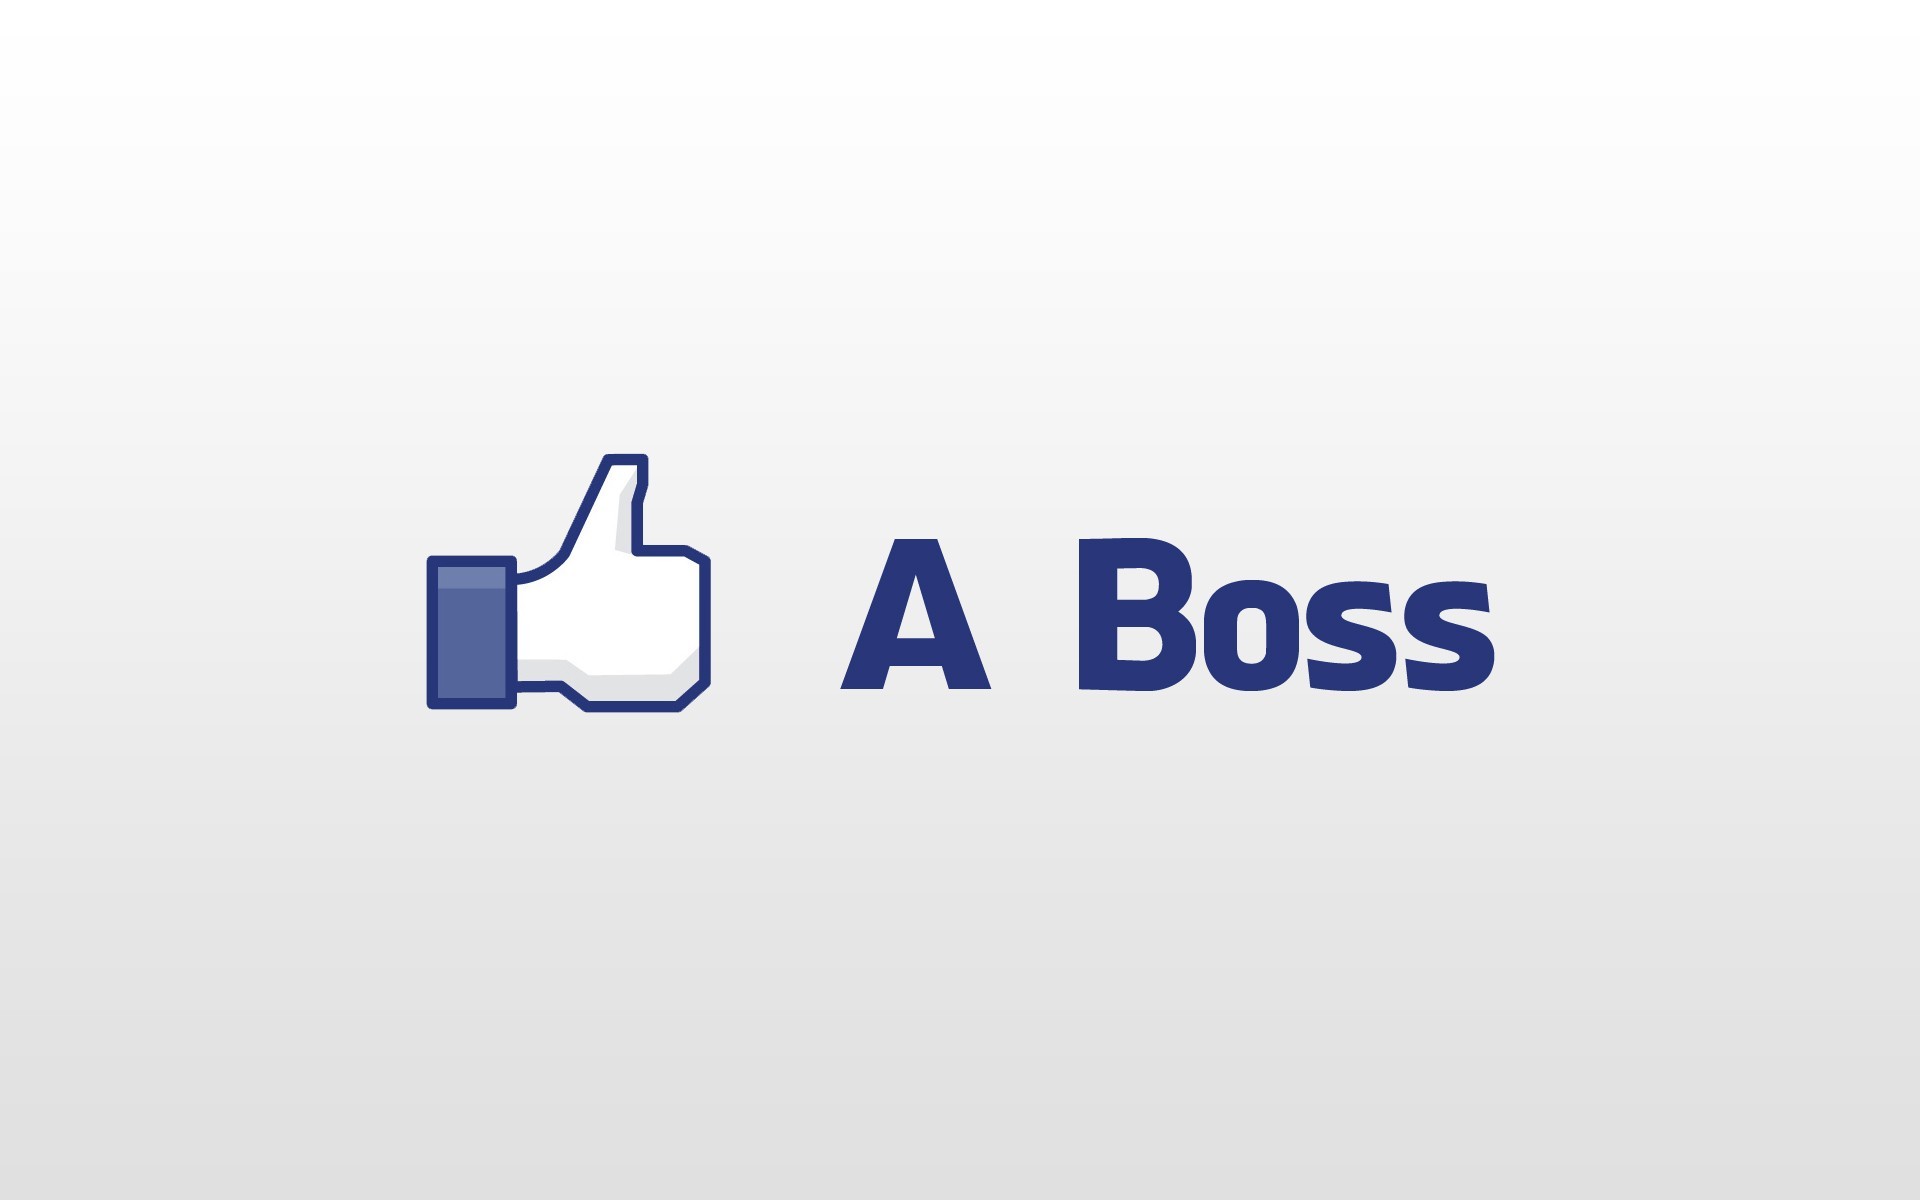 Like A Boss Hd Wallpapers, Facebook Like A Boss Desktop - Like A Boss Thumbs Up - HD Wallpaper 